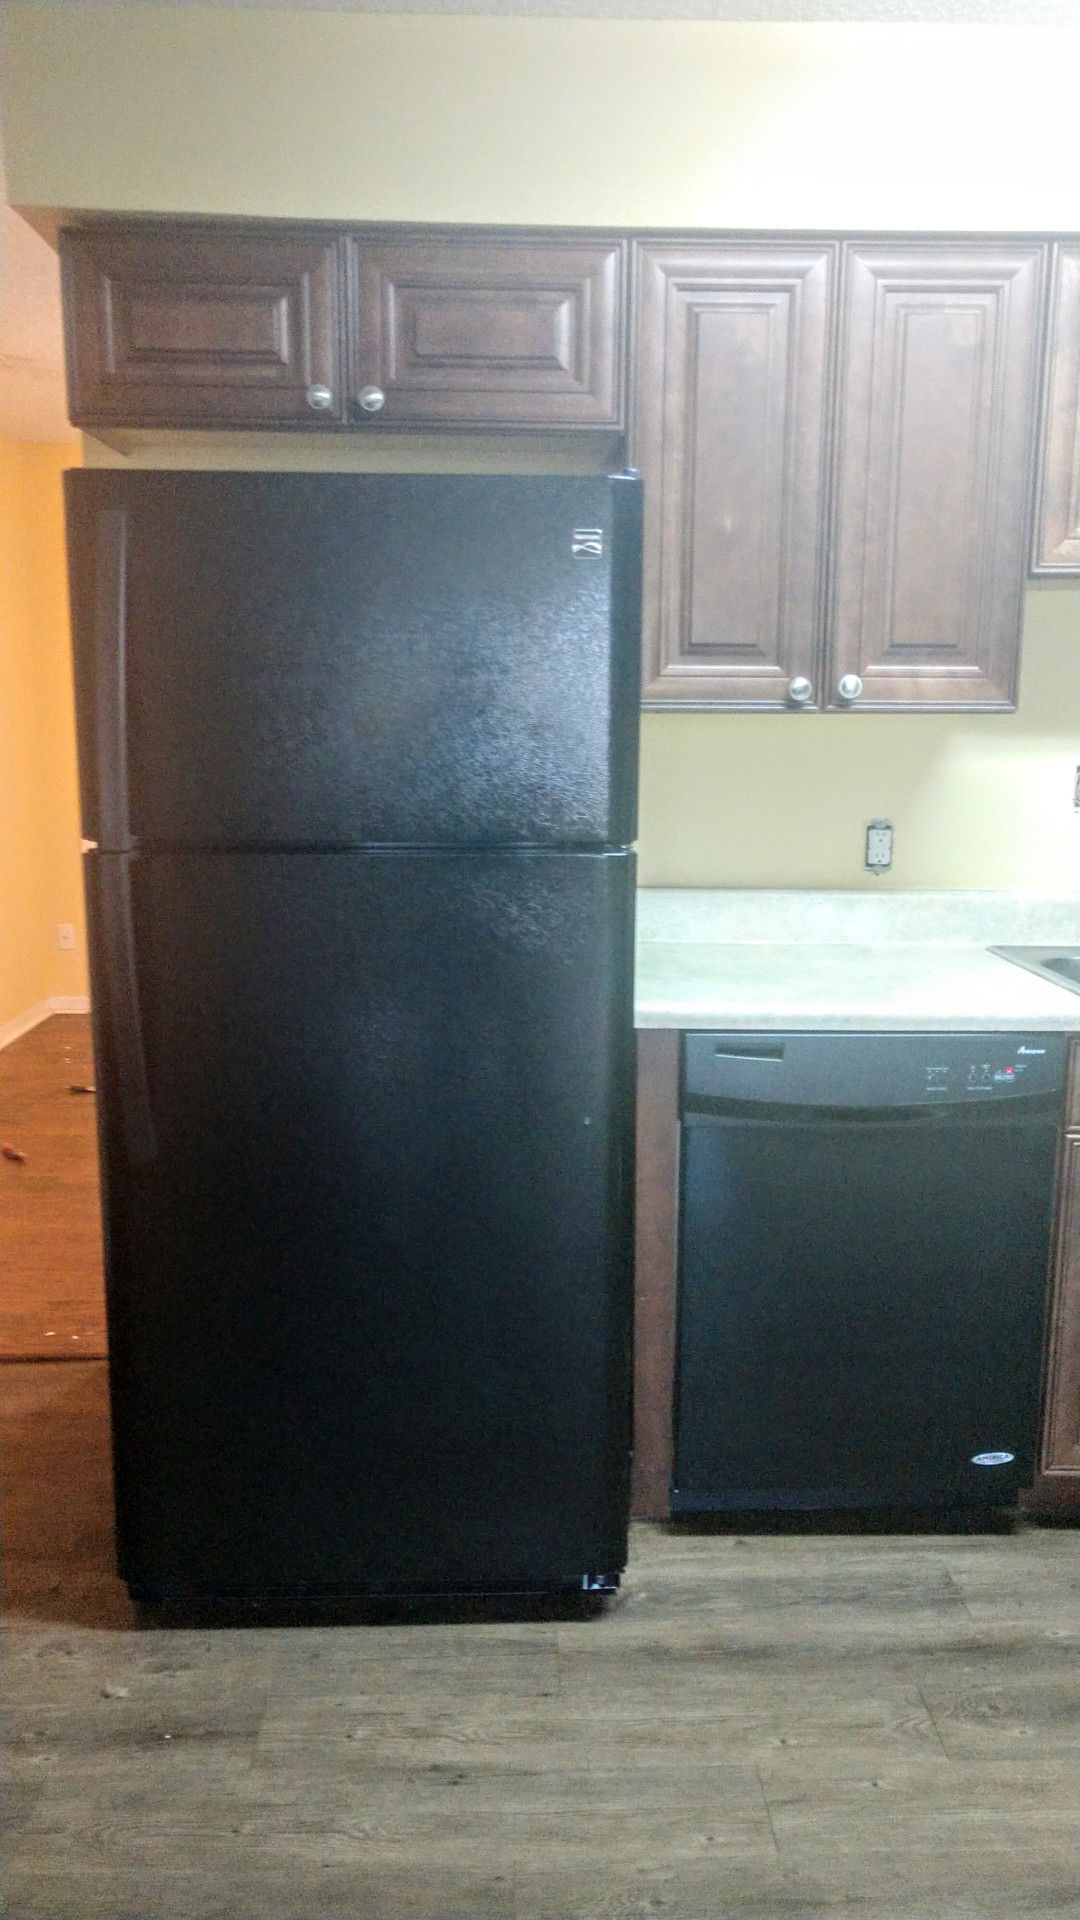 Stove dishwasher and refrigerator